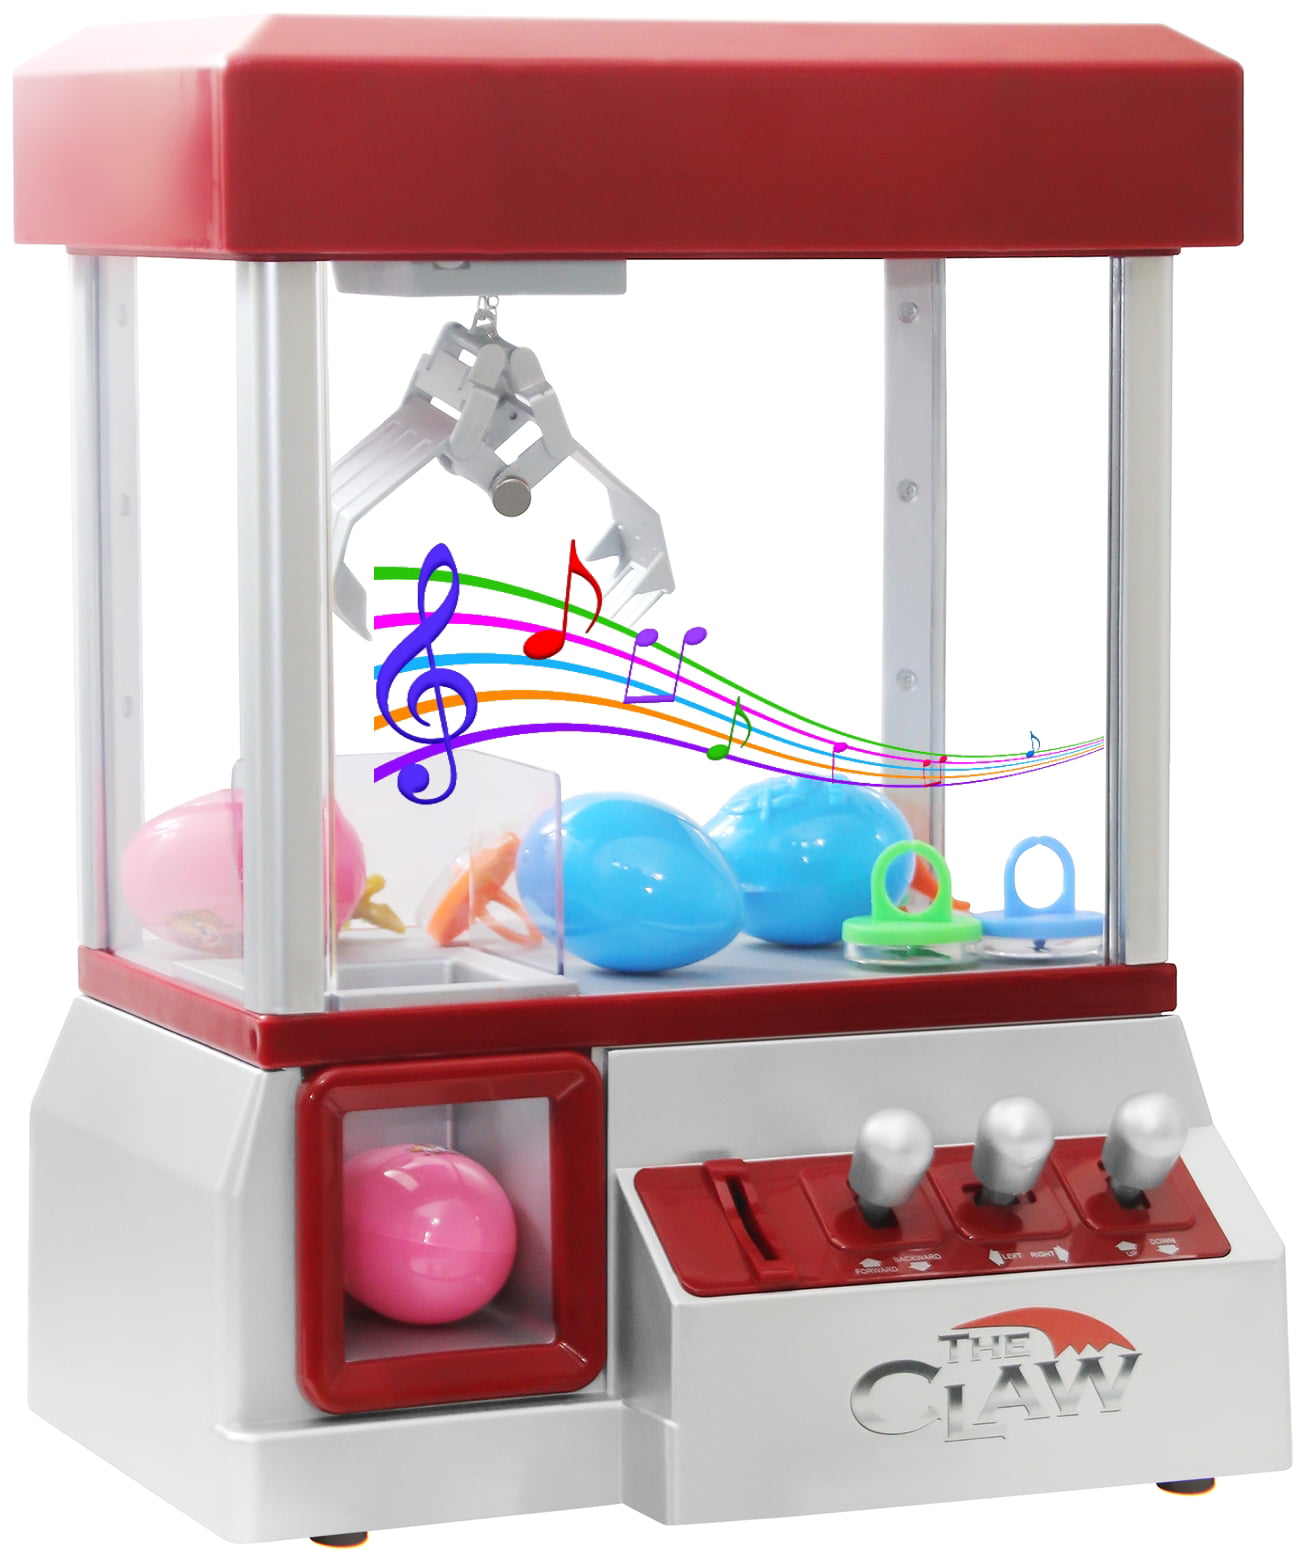 Bundaloo Claw Machine Arcade Game Candy Grabber Prize